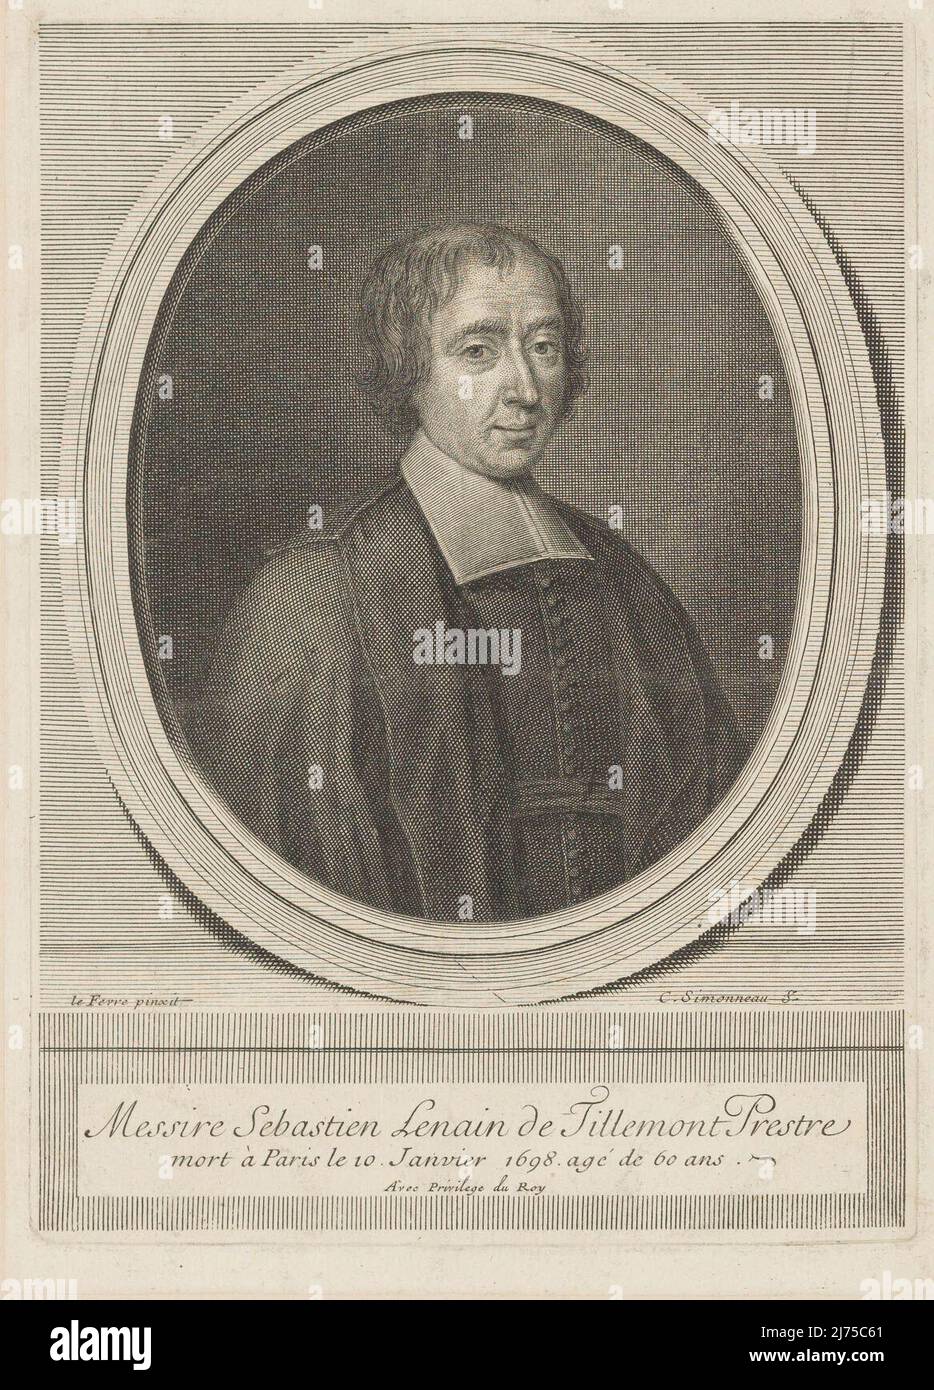 Louis-Sébastien Le Nain de Tillemont (30 November 1637 – 10 January 1698) was a French ecclesiastical historian. Stock Photo